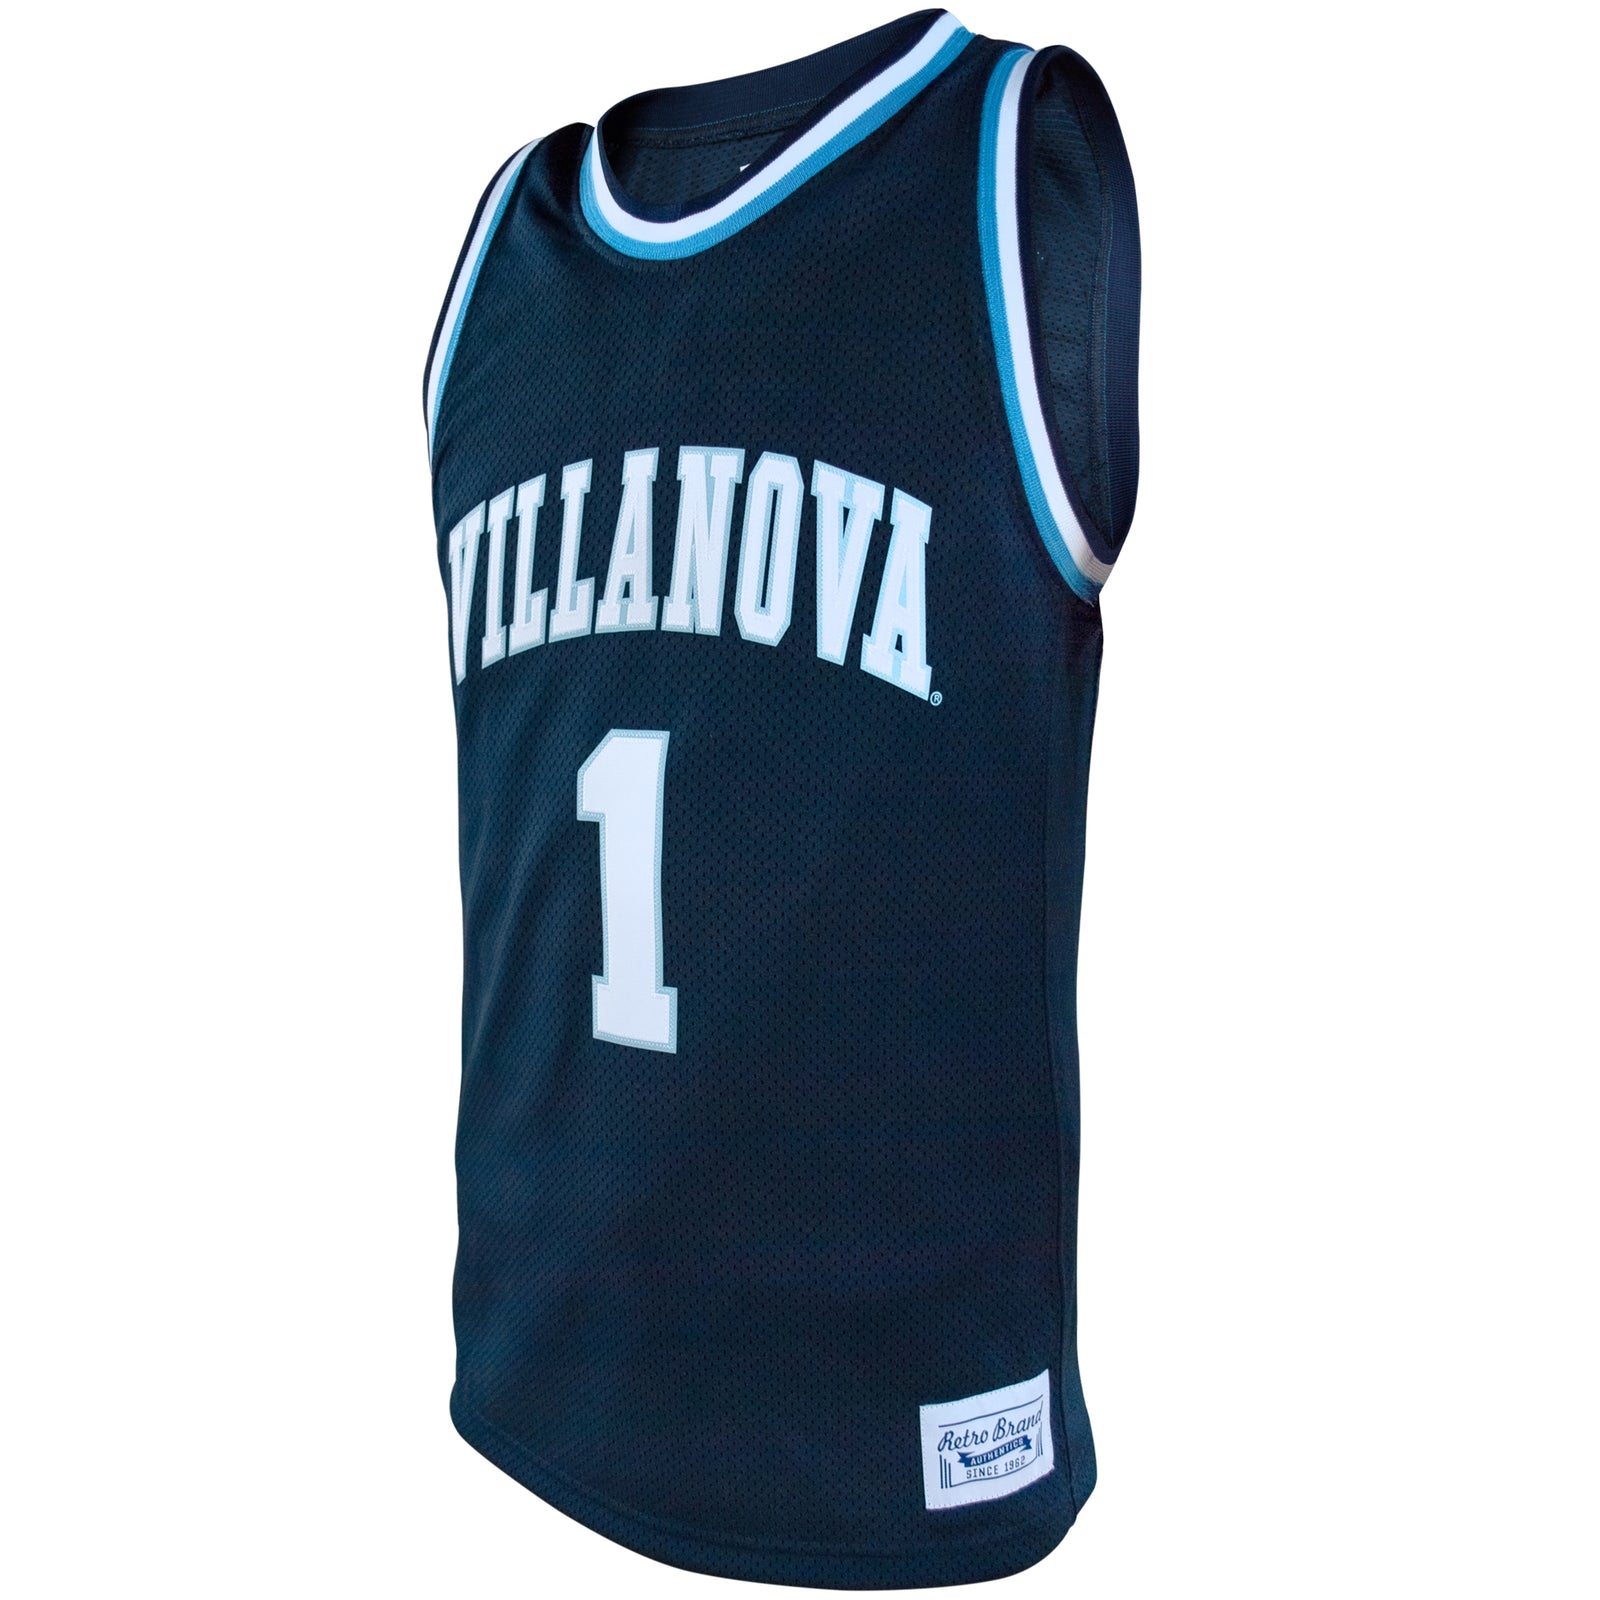 Villanova Wildcats NBA jersey